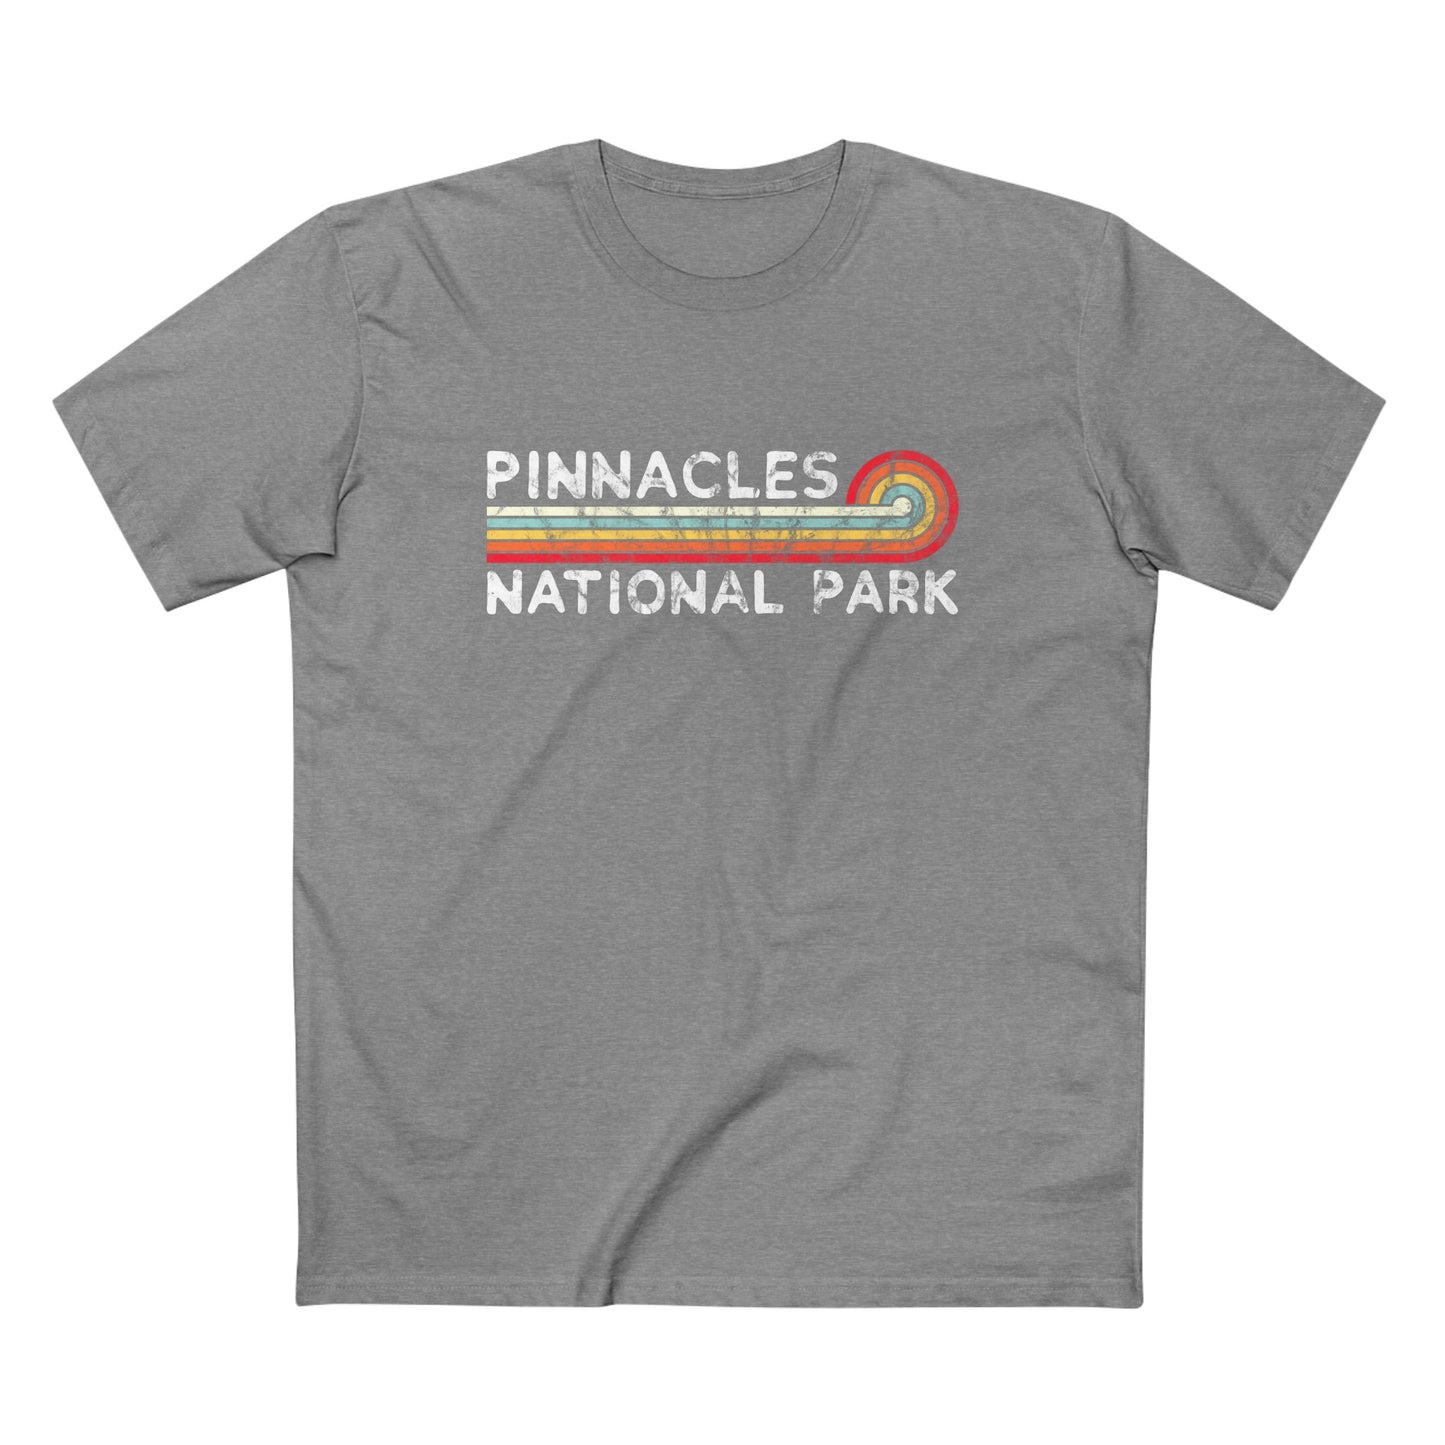 Pinnacles National Park T-Shirt - Vintage Stretched Sunrise